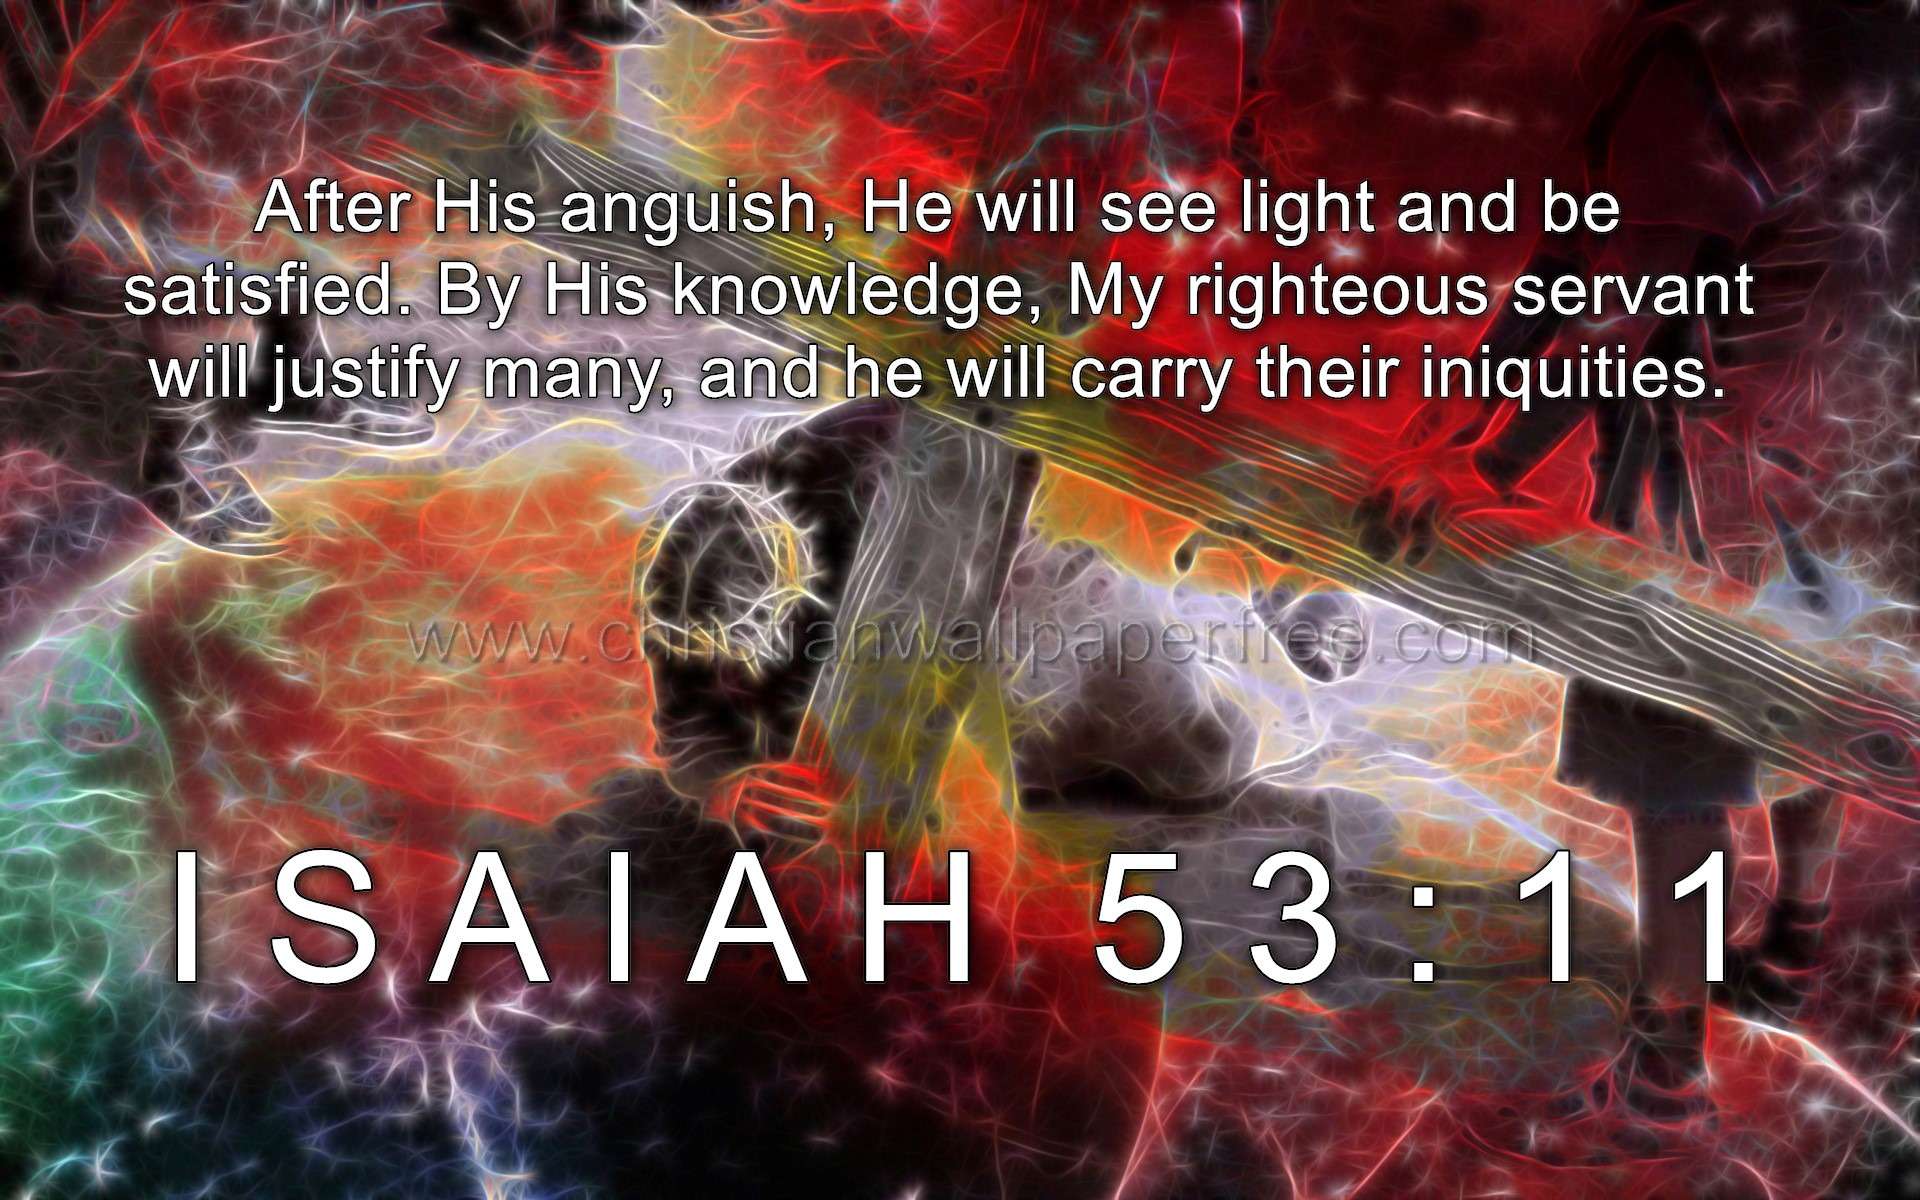 Isaiah 53 Verse 11